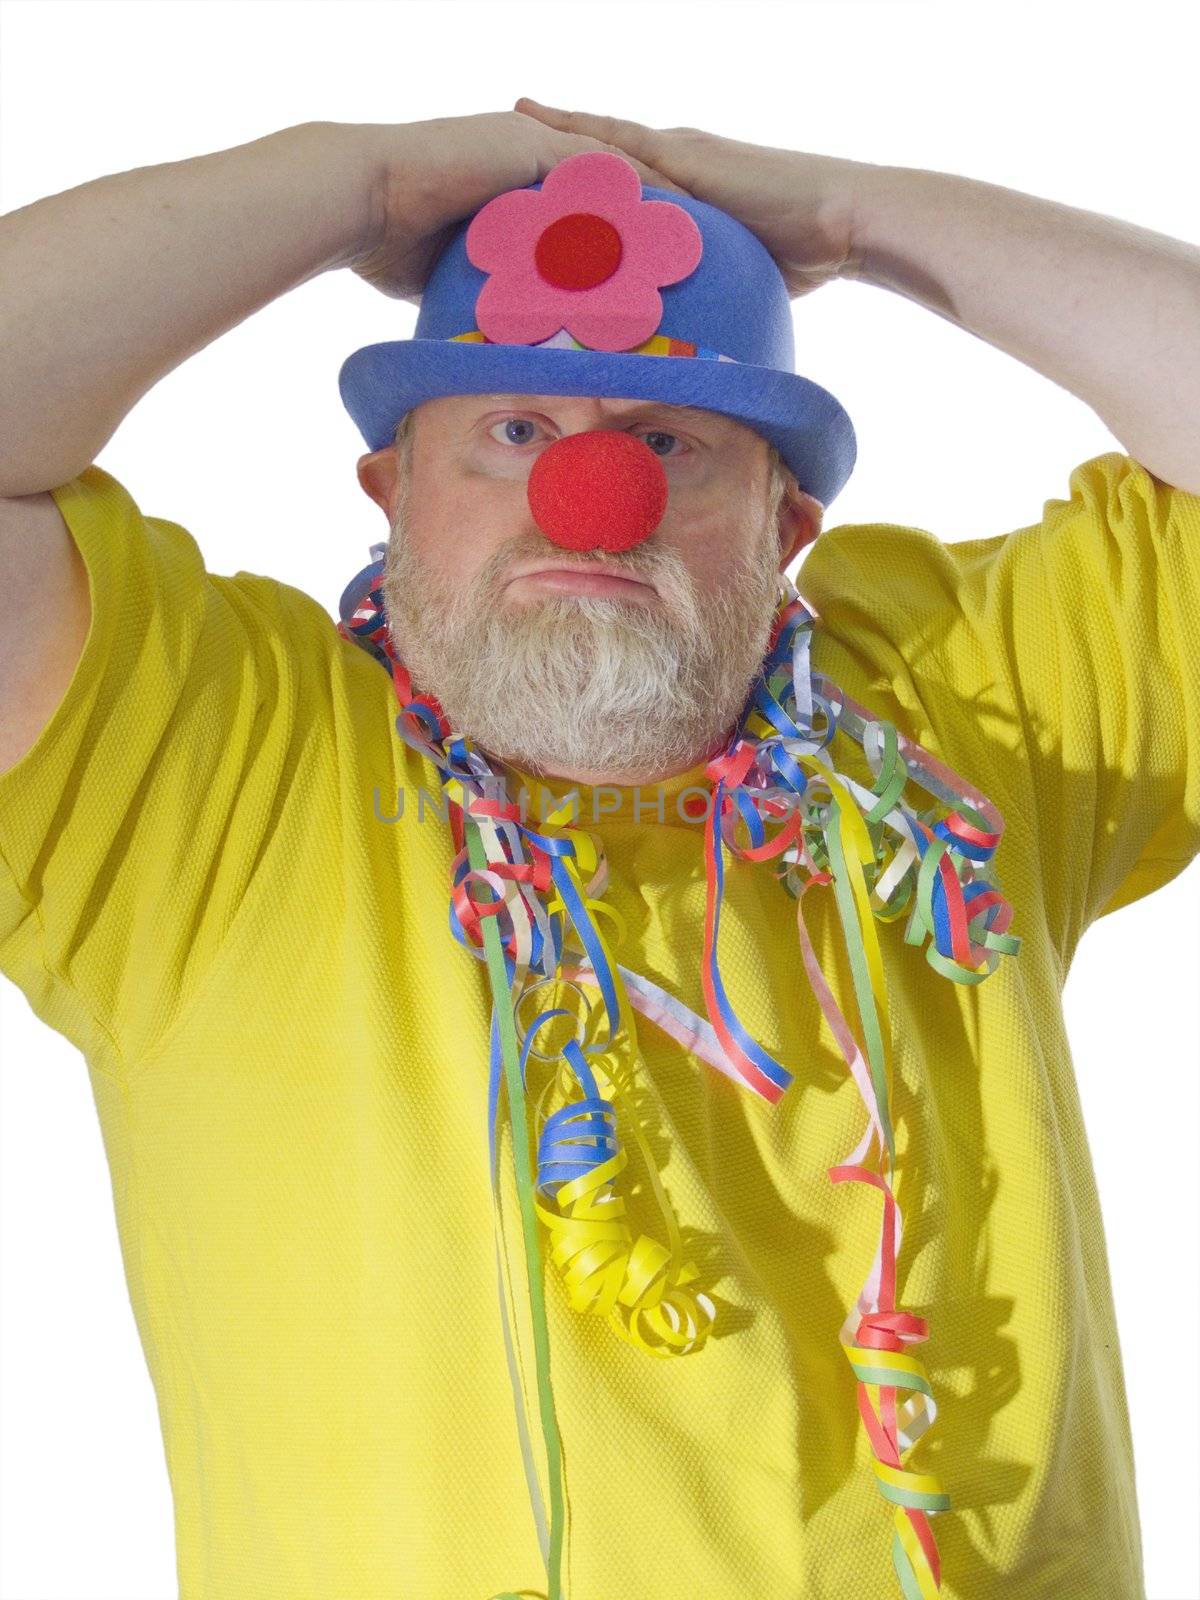 Clown with blue hat by Teamarbeit